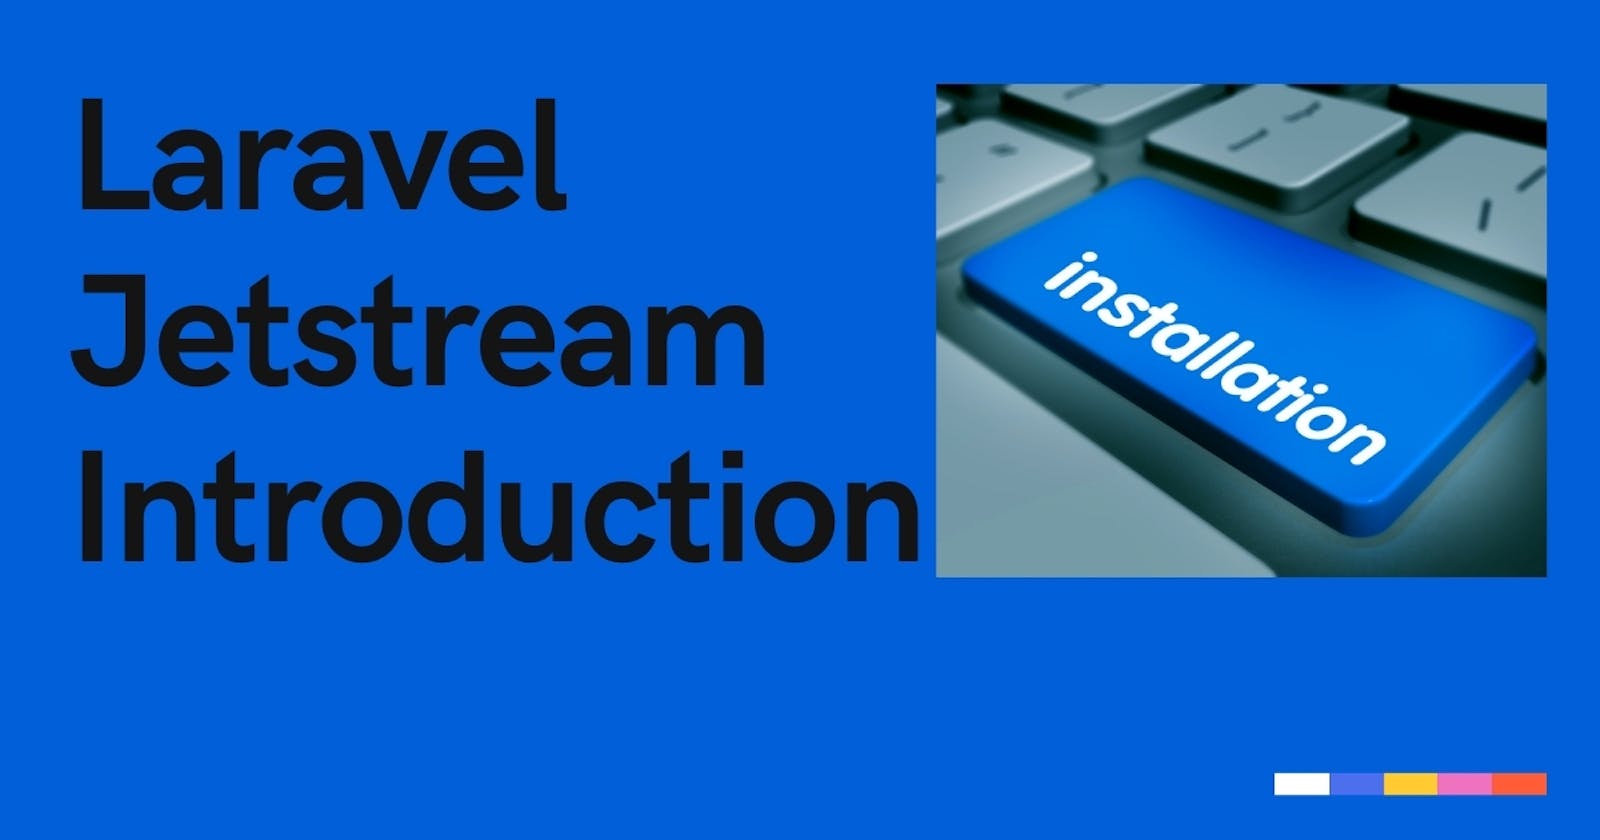 Laravel Jetstream an introduction